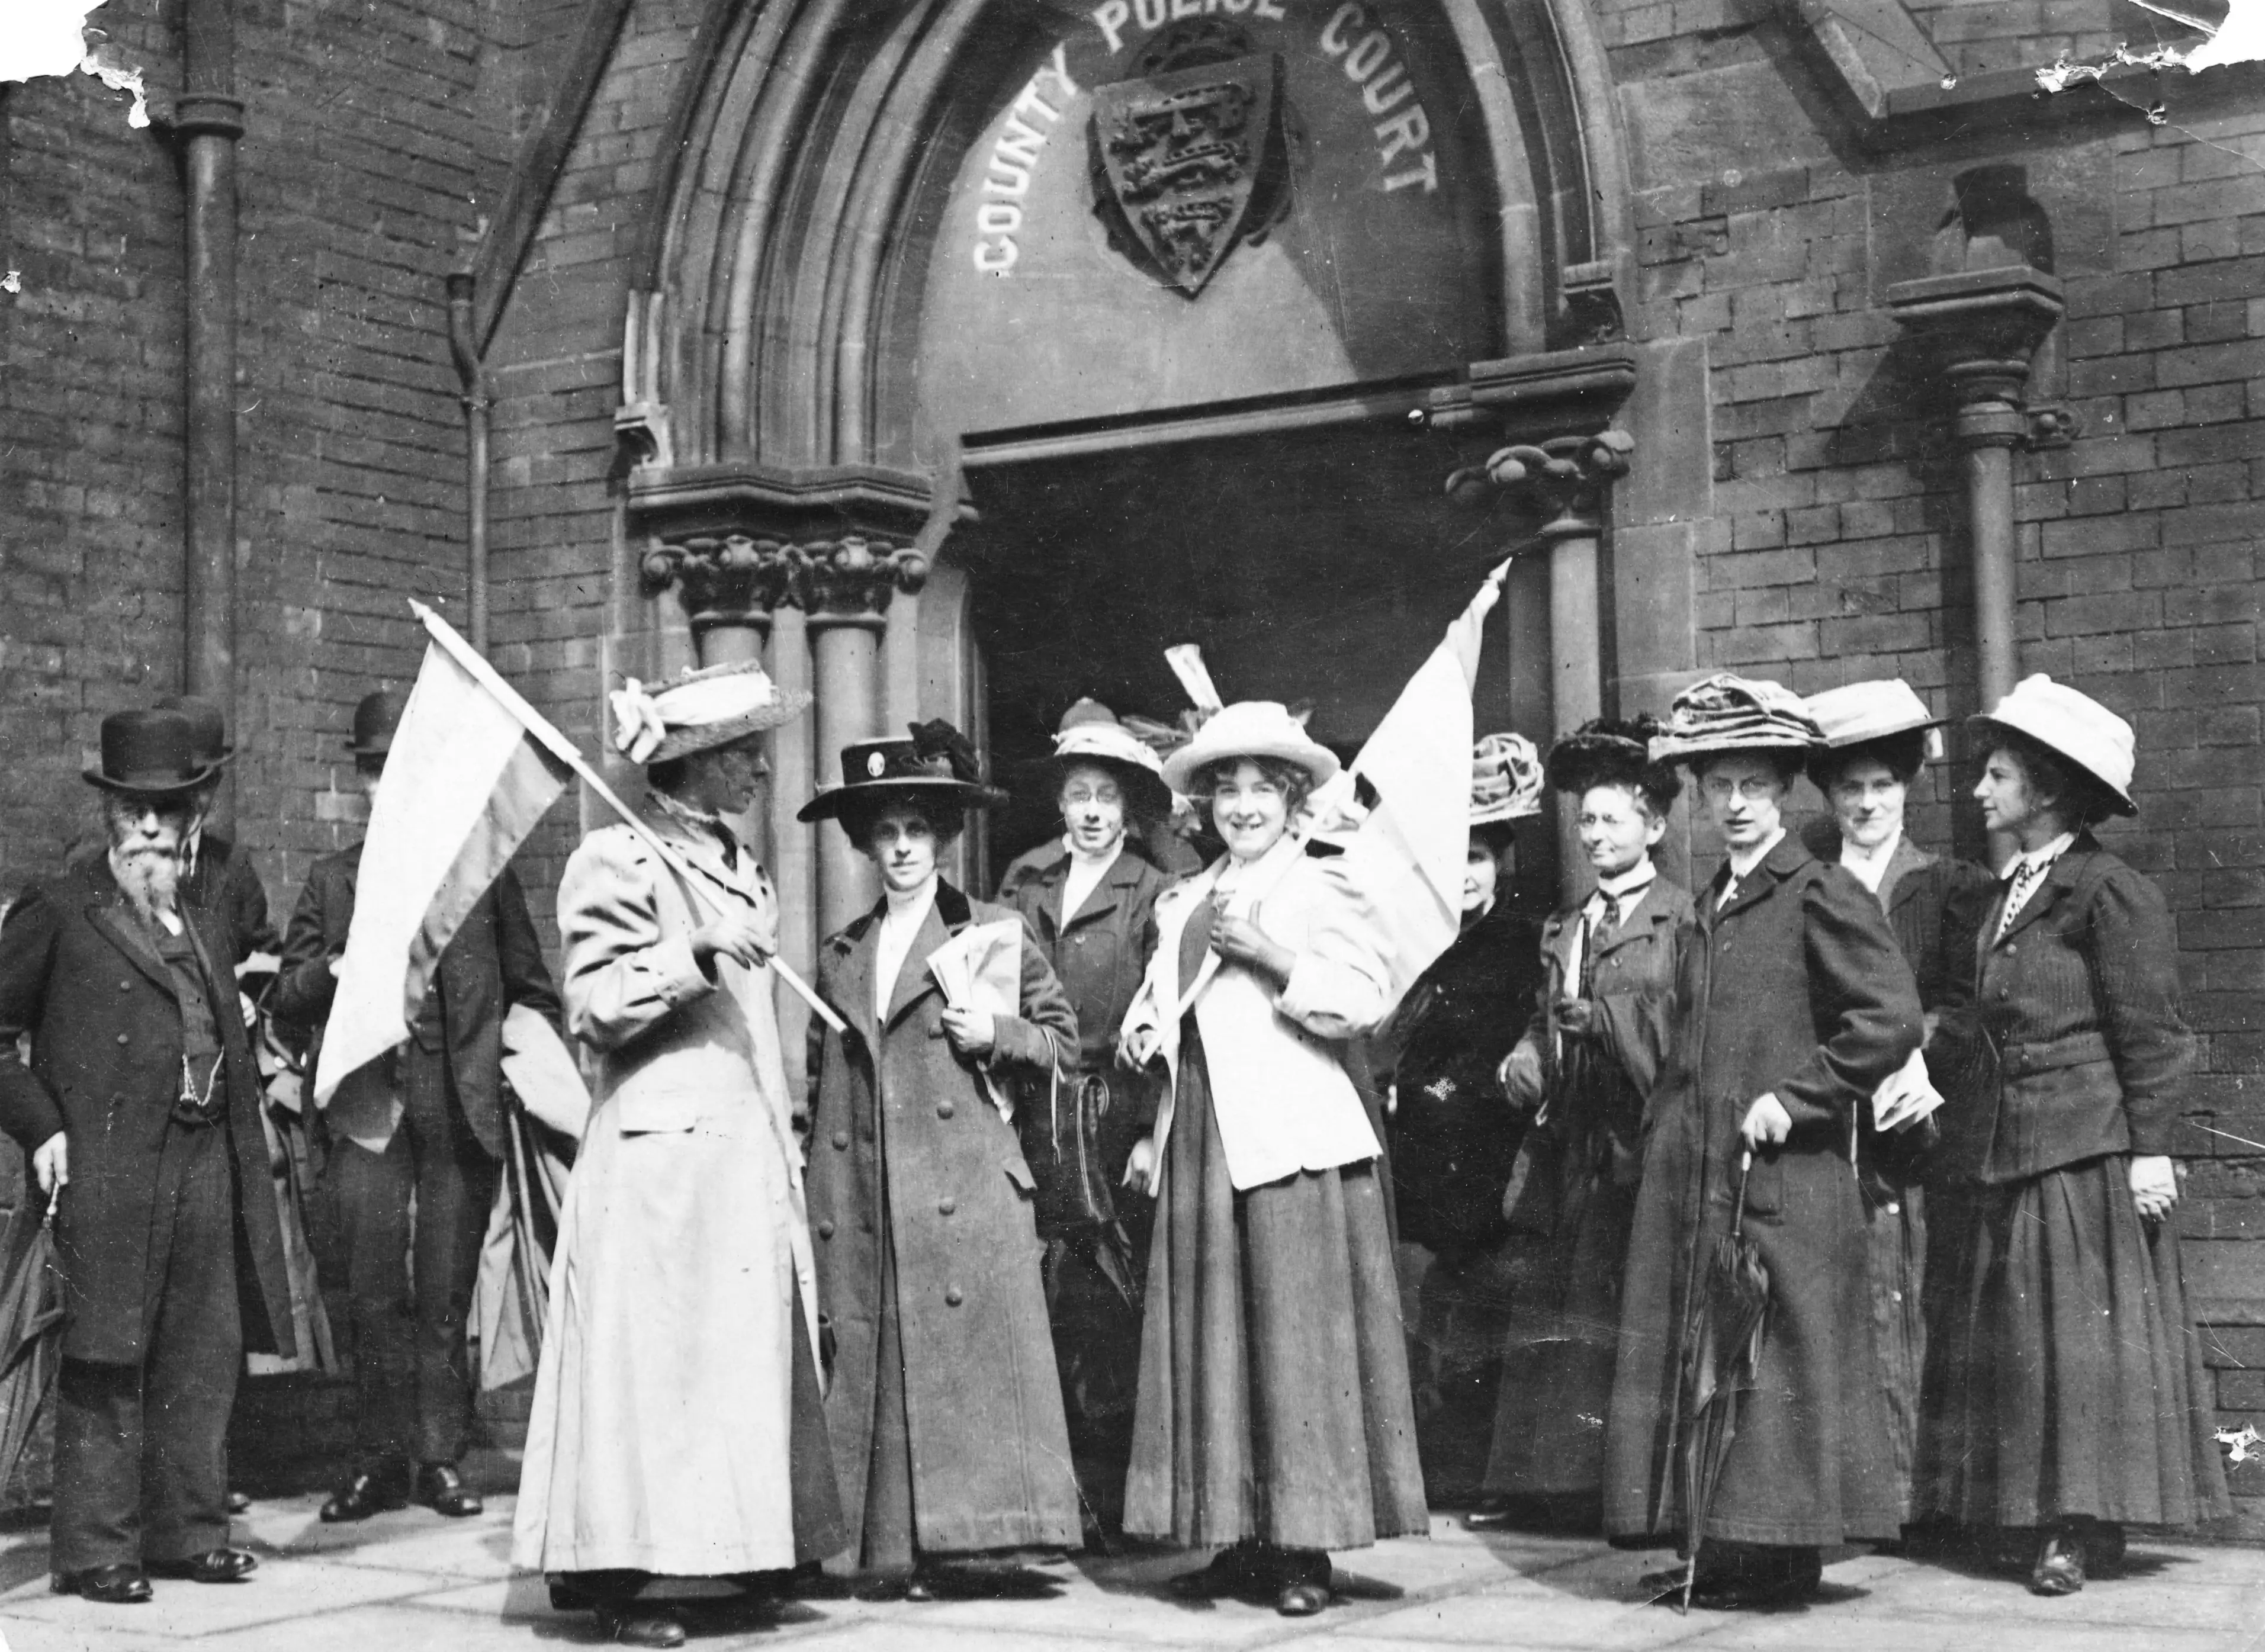 Women finally partially won the vote in Britain in 1918 (